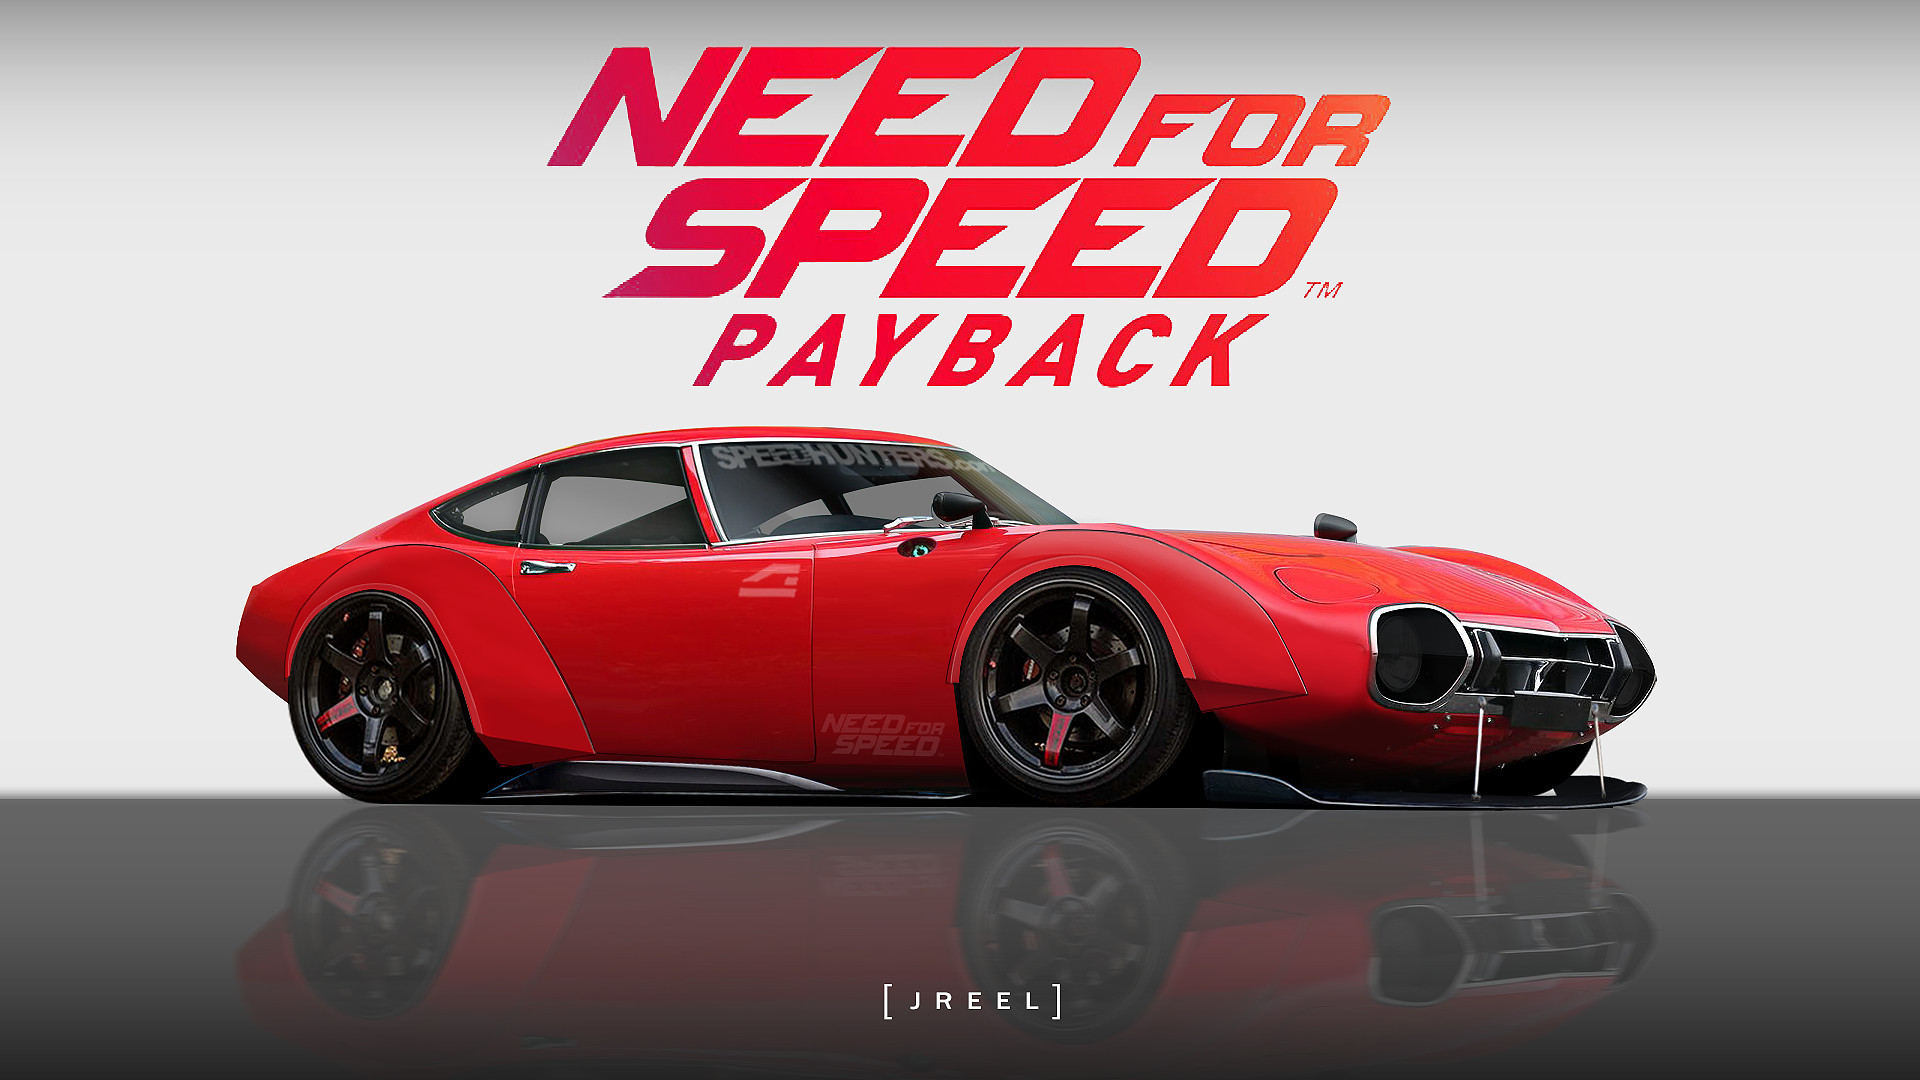 Need for speed playback. NFS пейбек. NFS Payback картинки. Need for Speed: Payback (2017). Машины из NFS Payback.